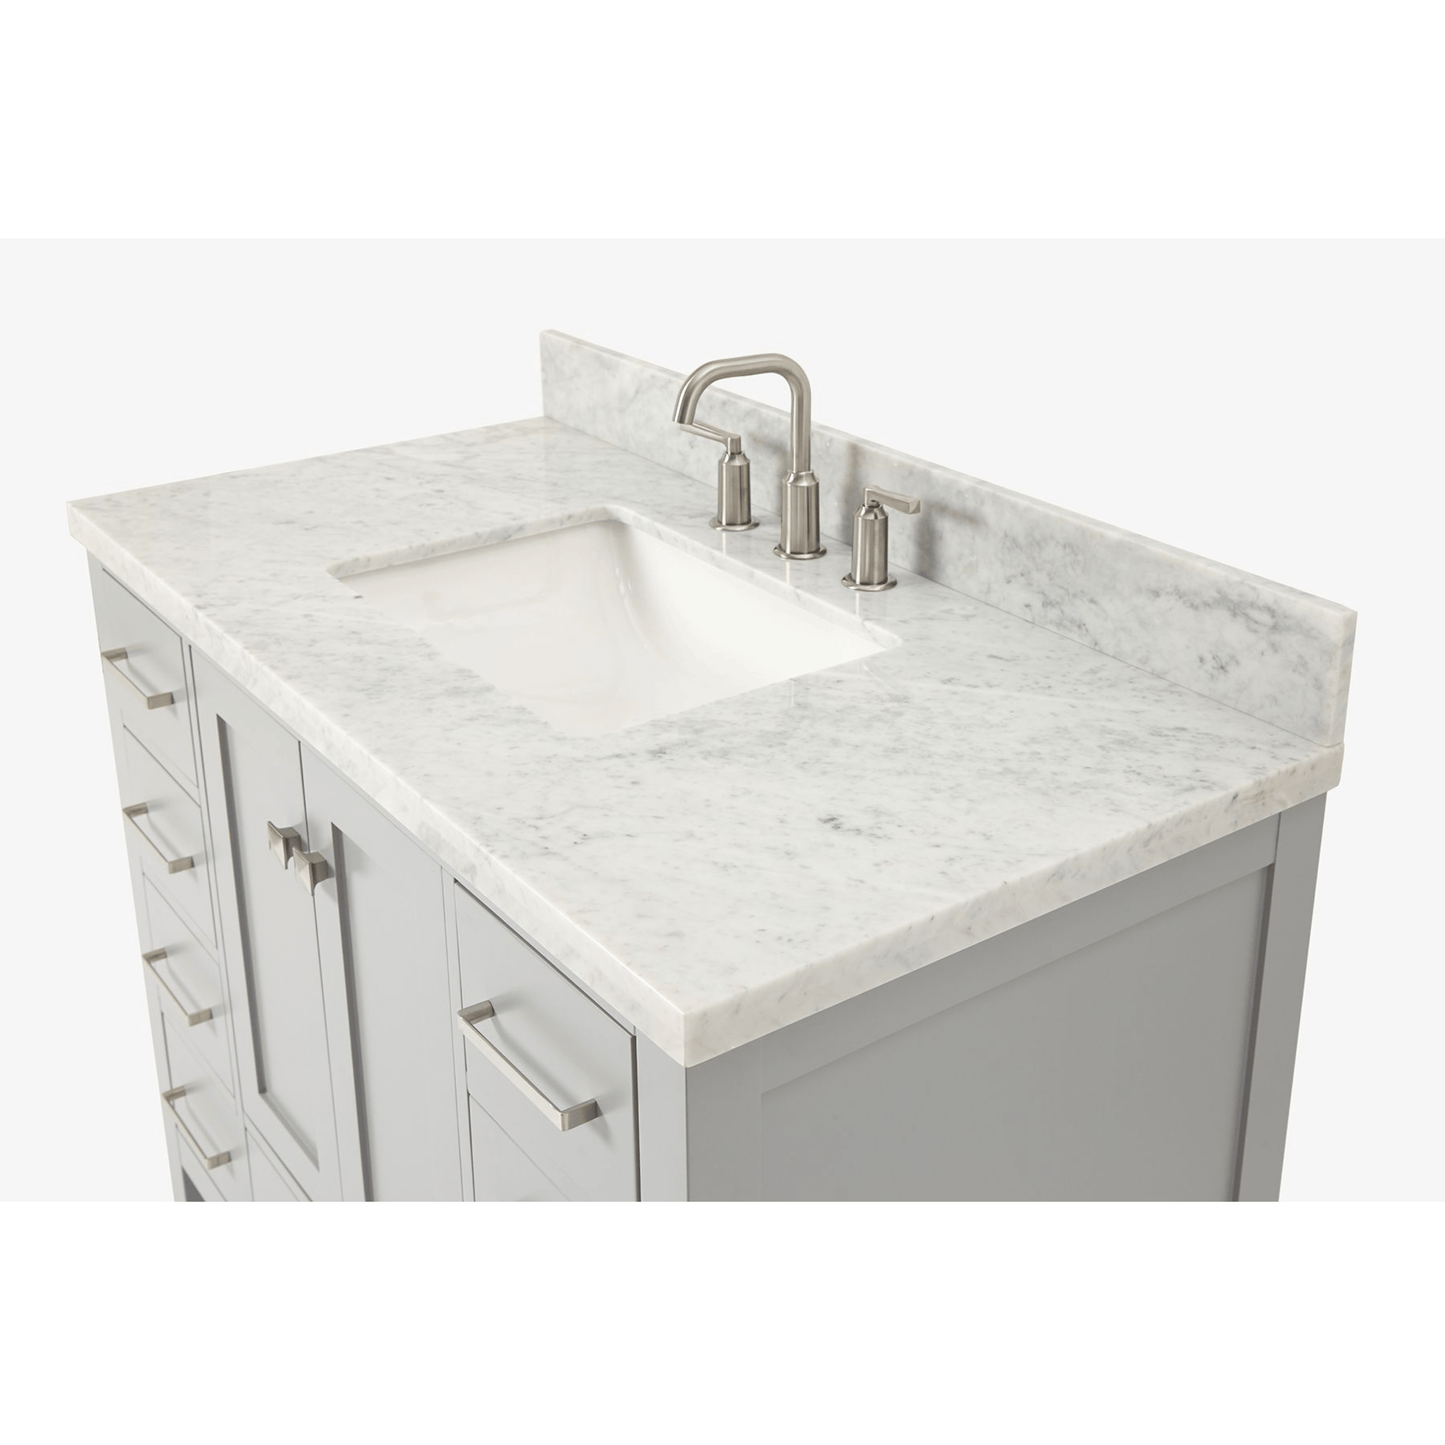 Ariel Cambridge  43" Modern Grey Single Rectangle Sink Vanity